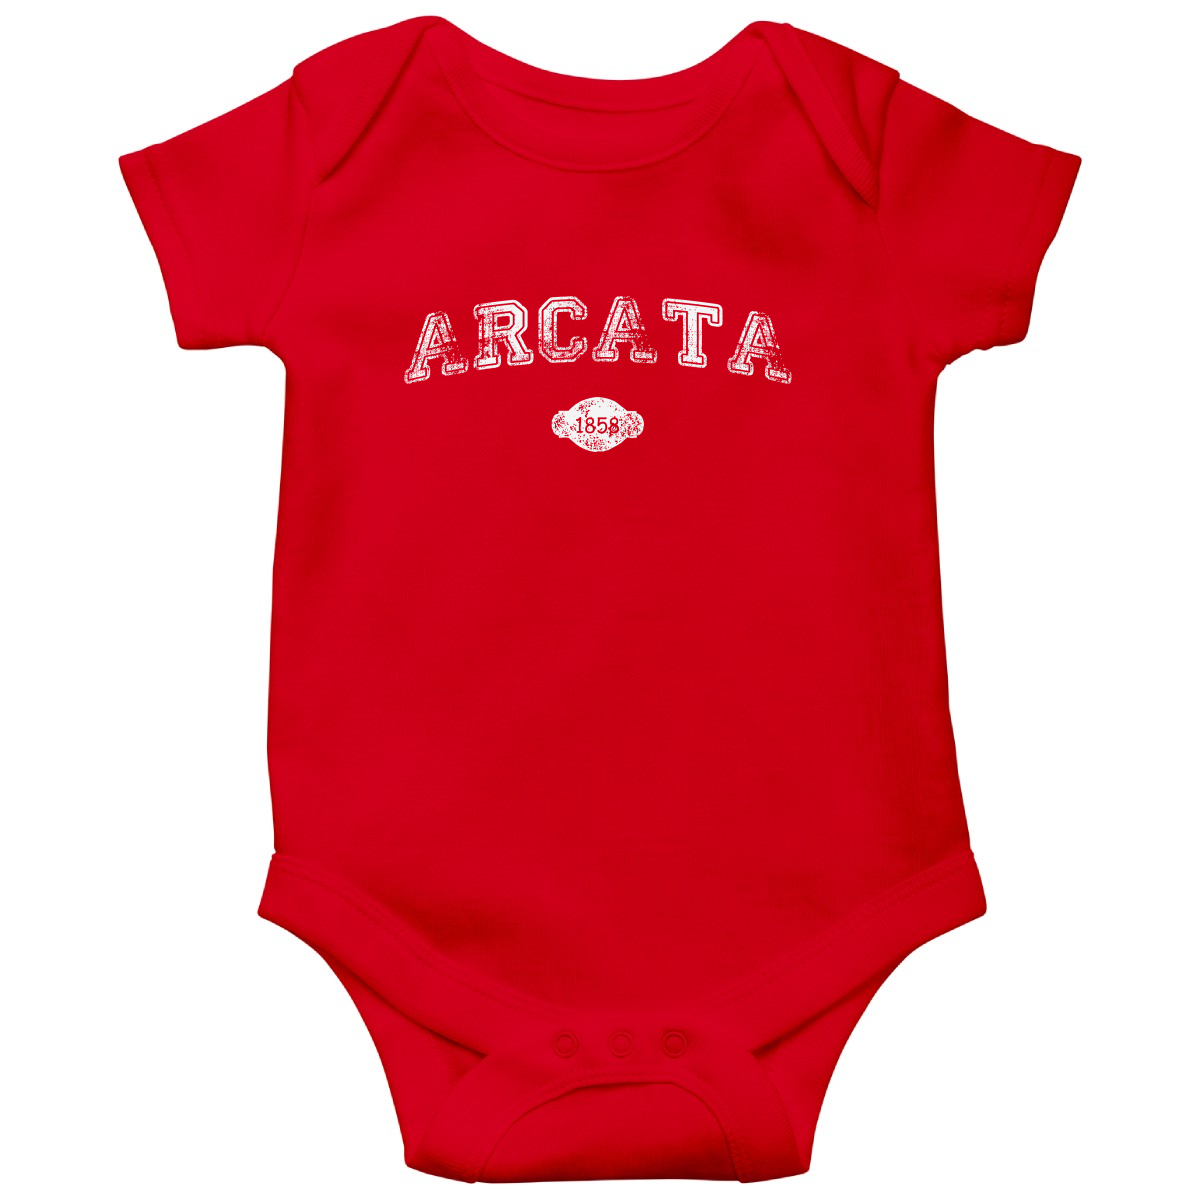 Arcata 1858 Represent Baby Bodysuits | Red